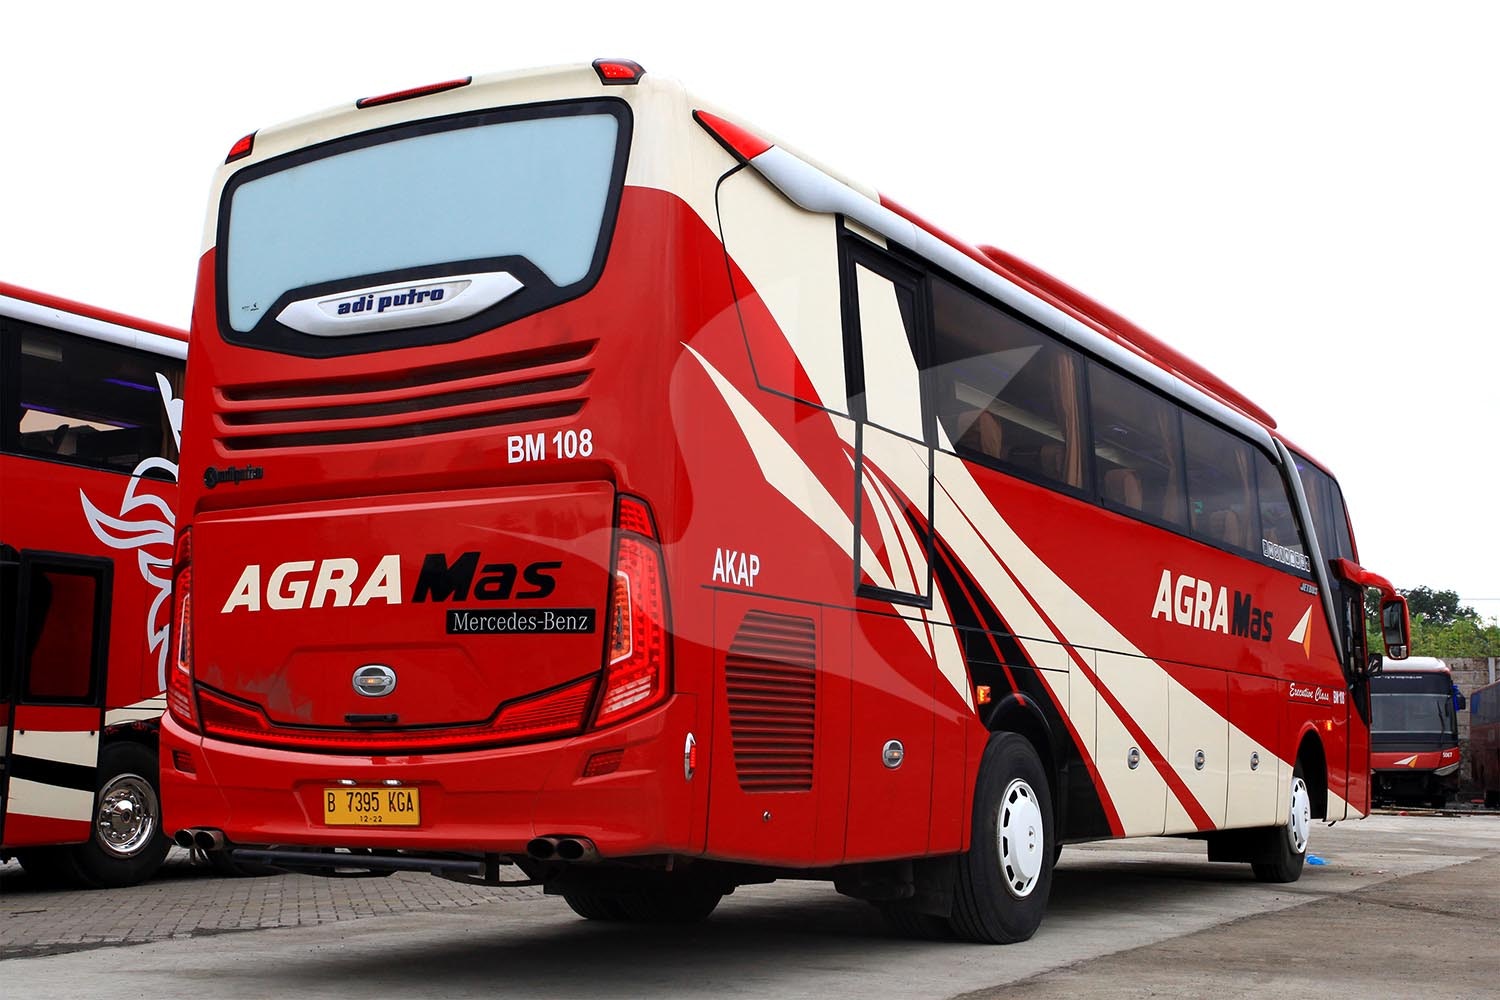 Livery BUSSID Agra Mas HD - Bus Tangerang Banten